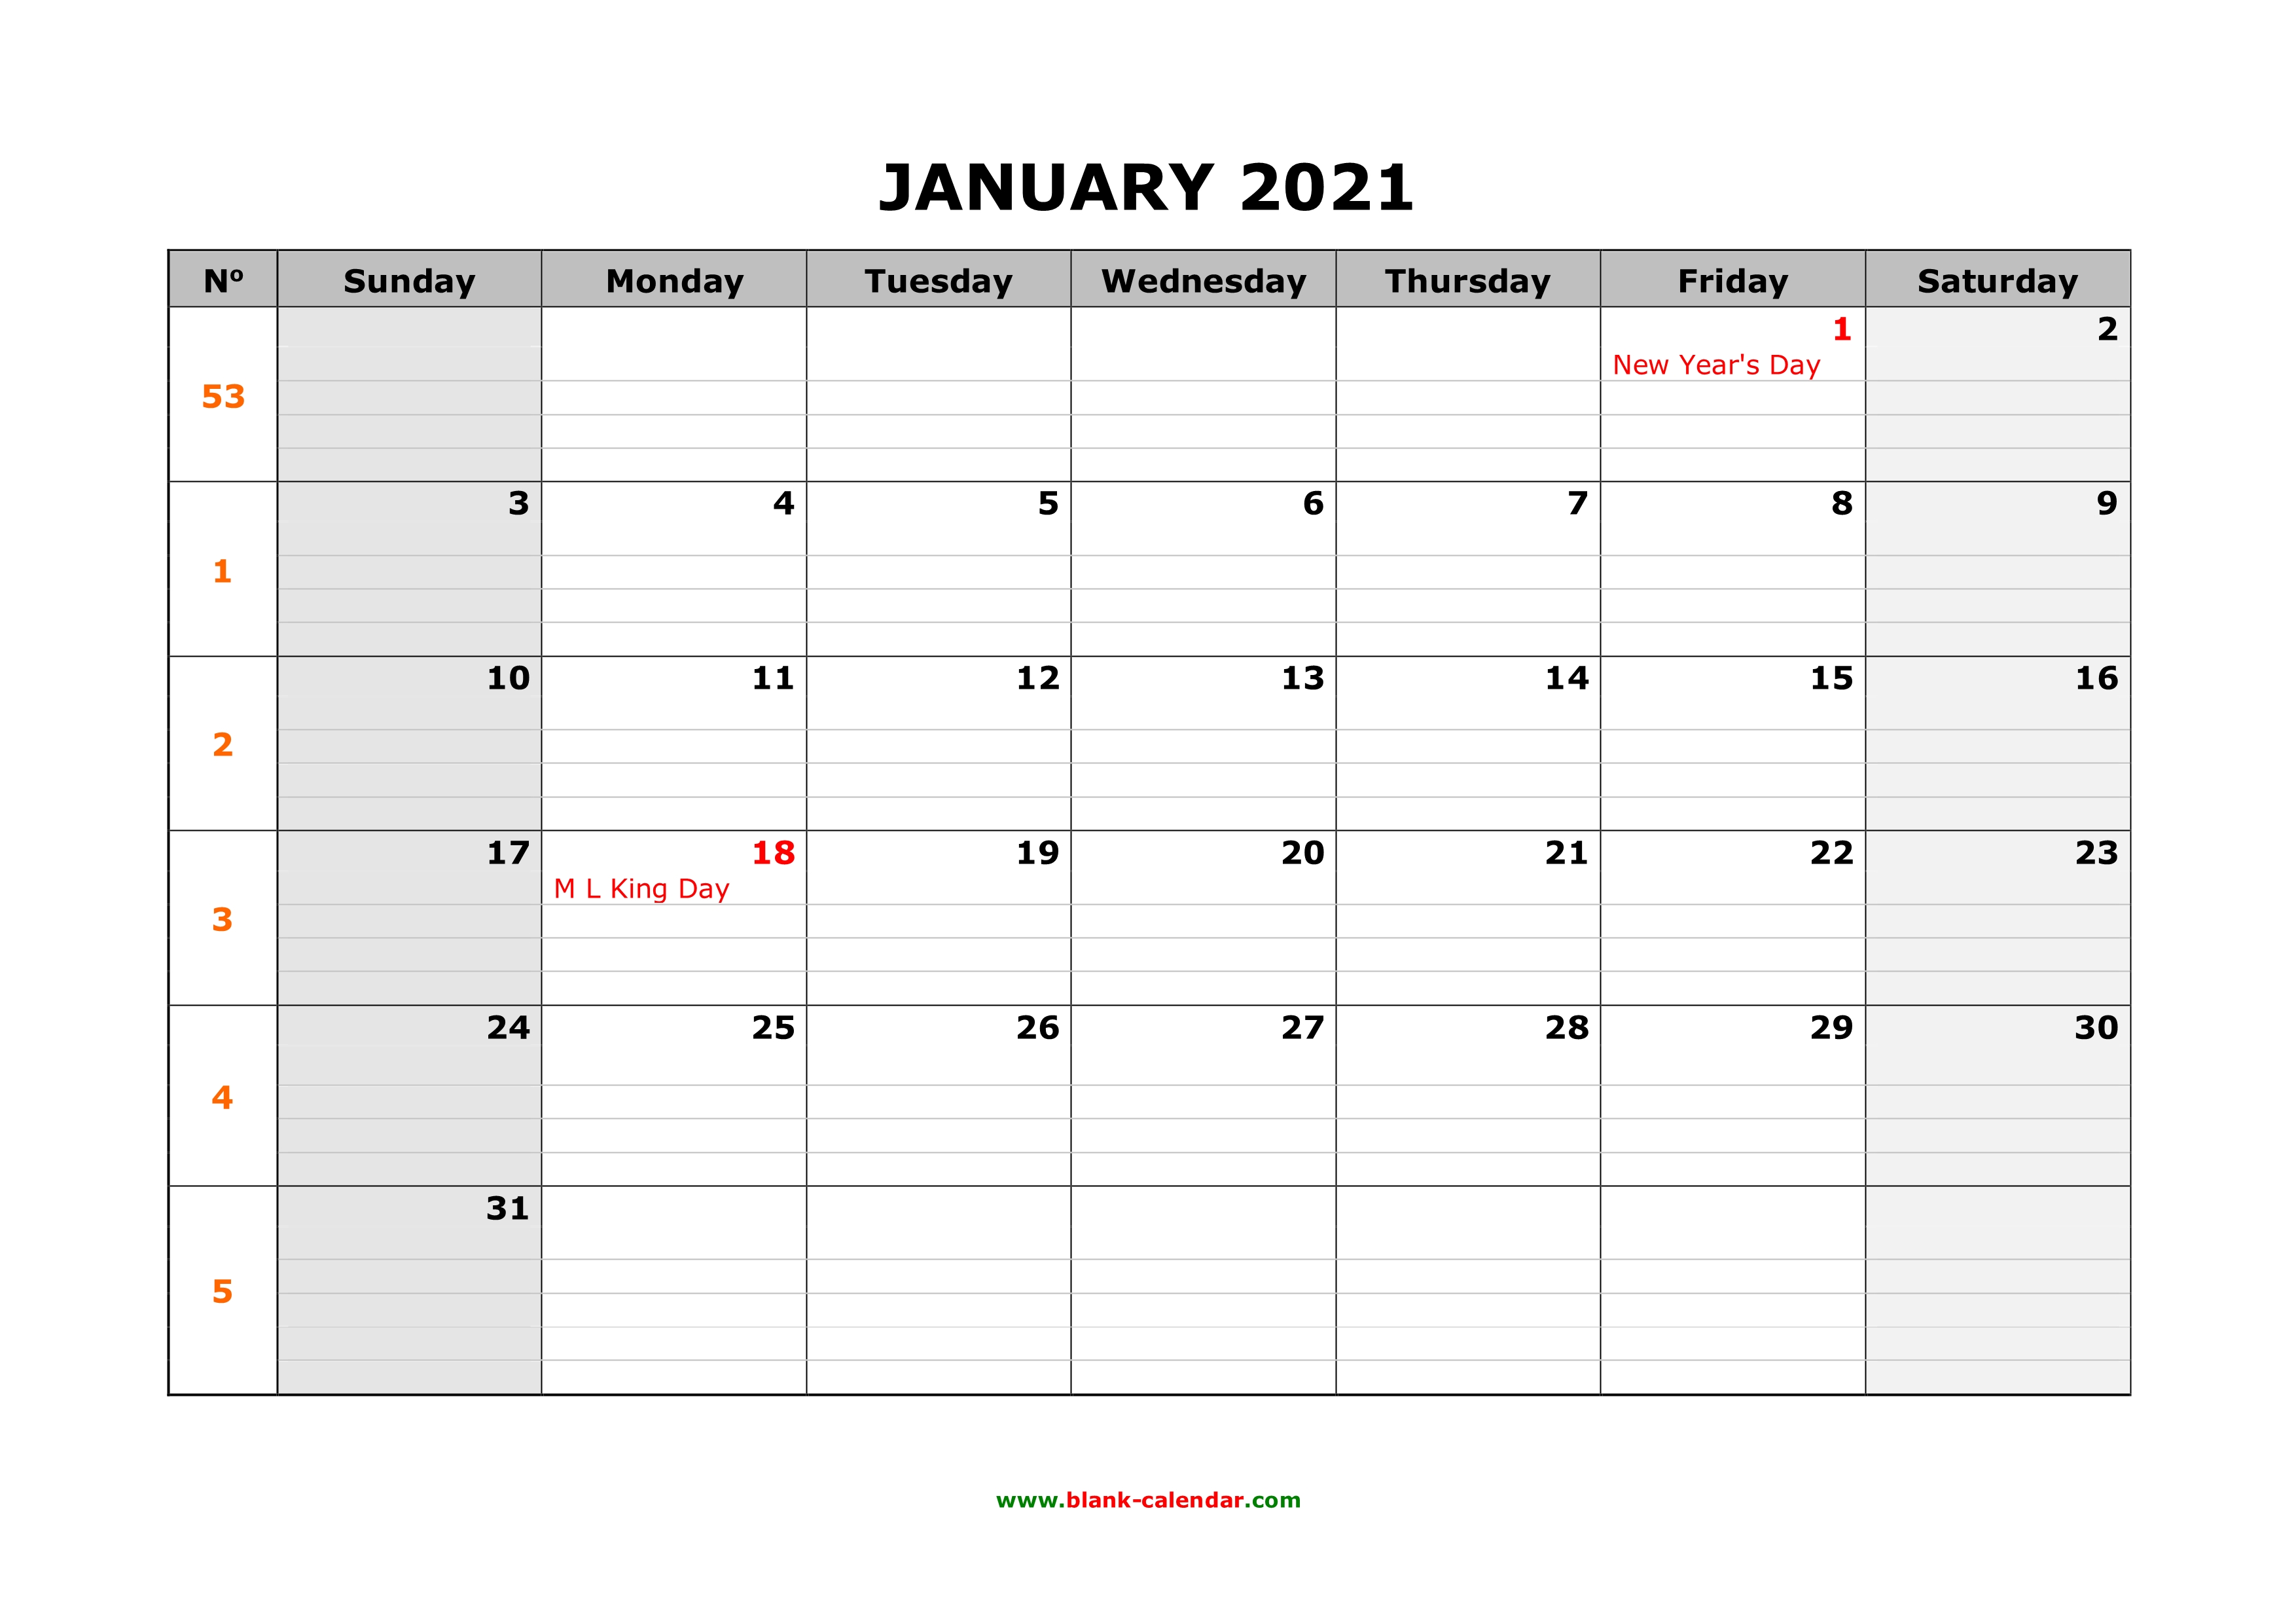 calendar grid january 2021 Free Download Printable January 2021 Calendar Large Box Grid Space For Notes calendar grid january 2021